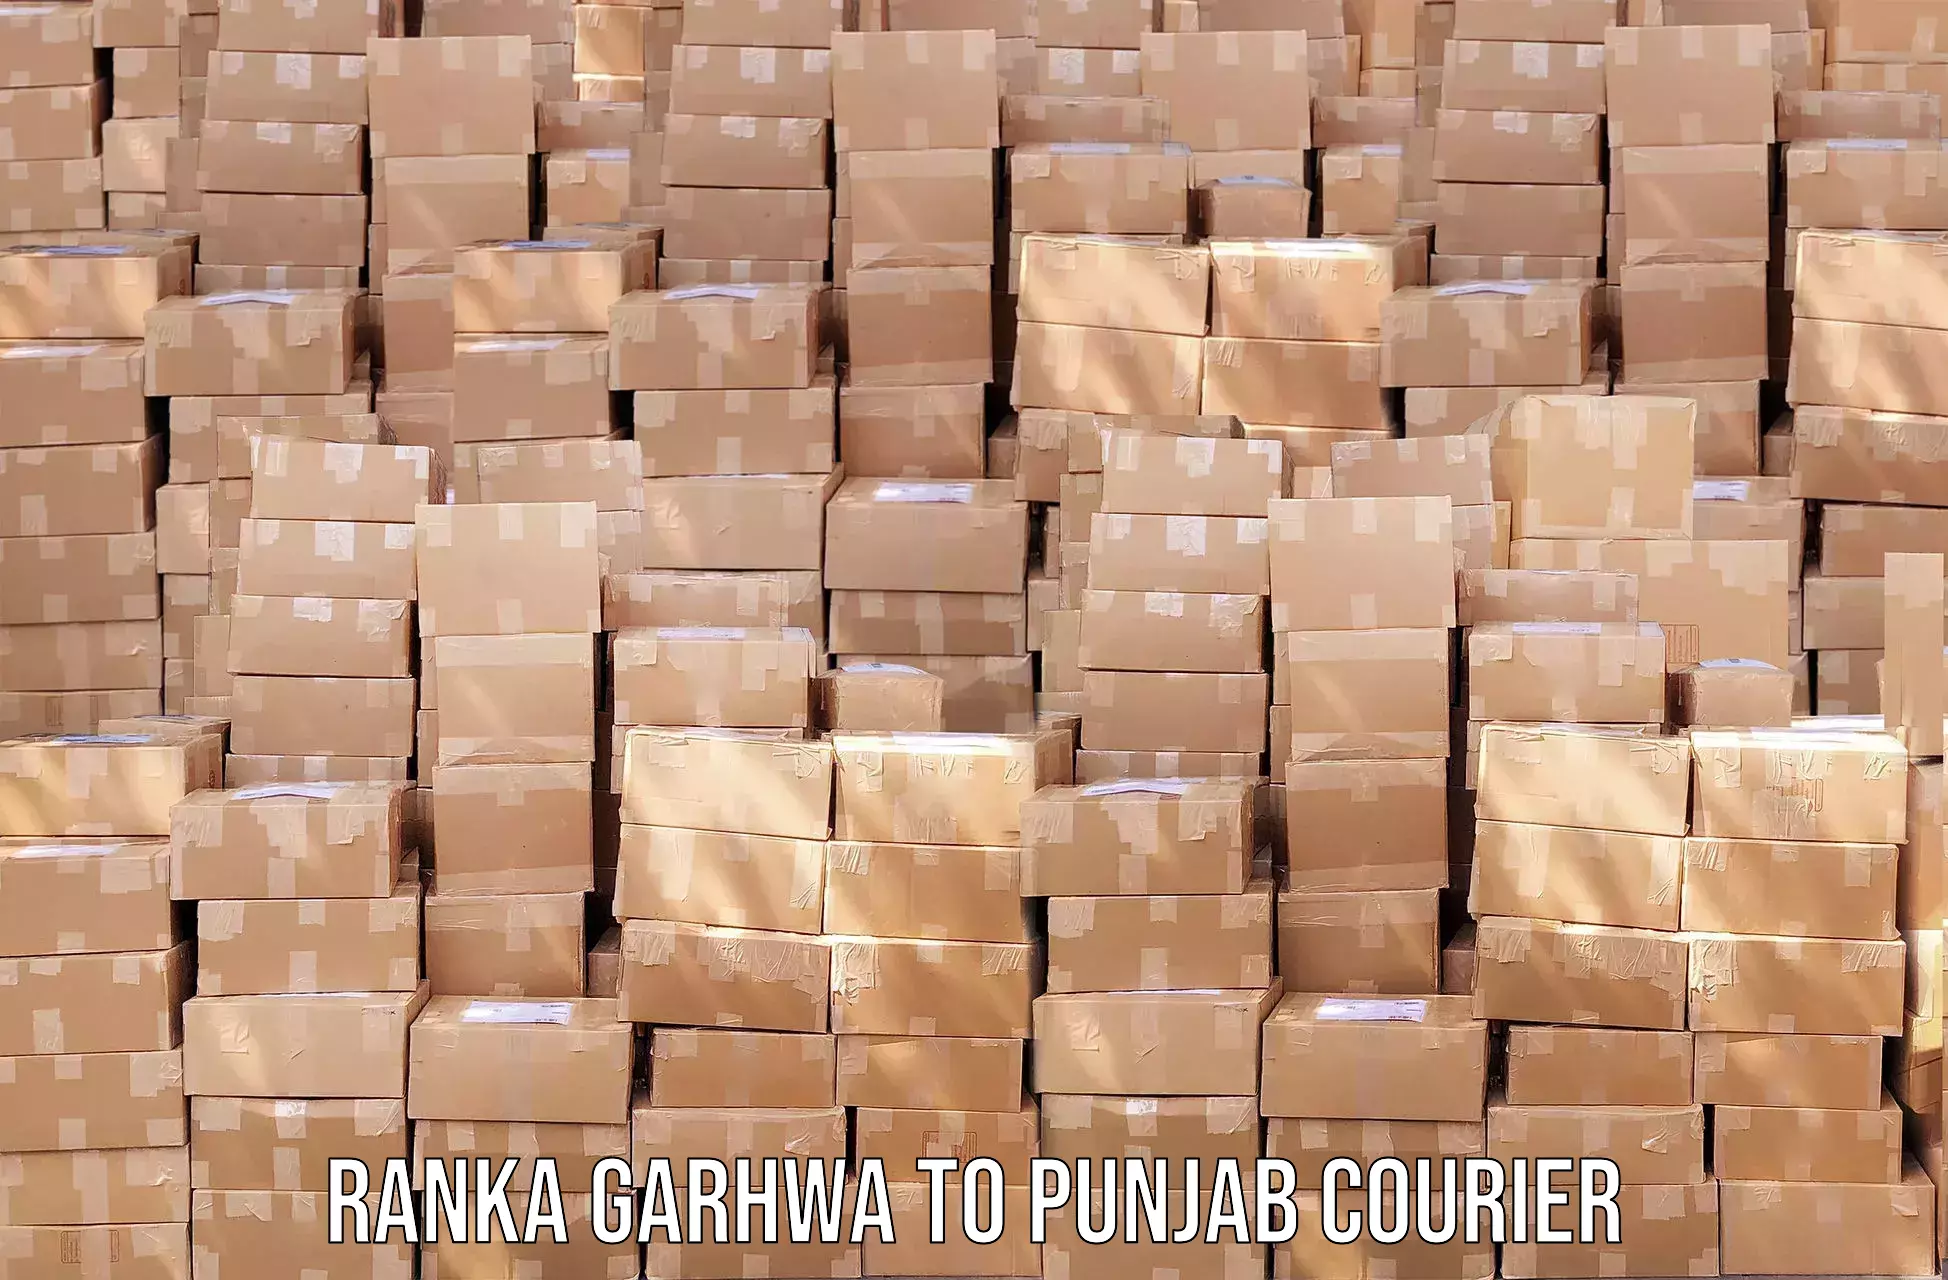 Reliable courier service Ranka Garhwa to Dhuri